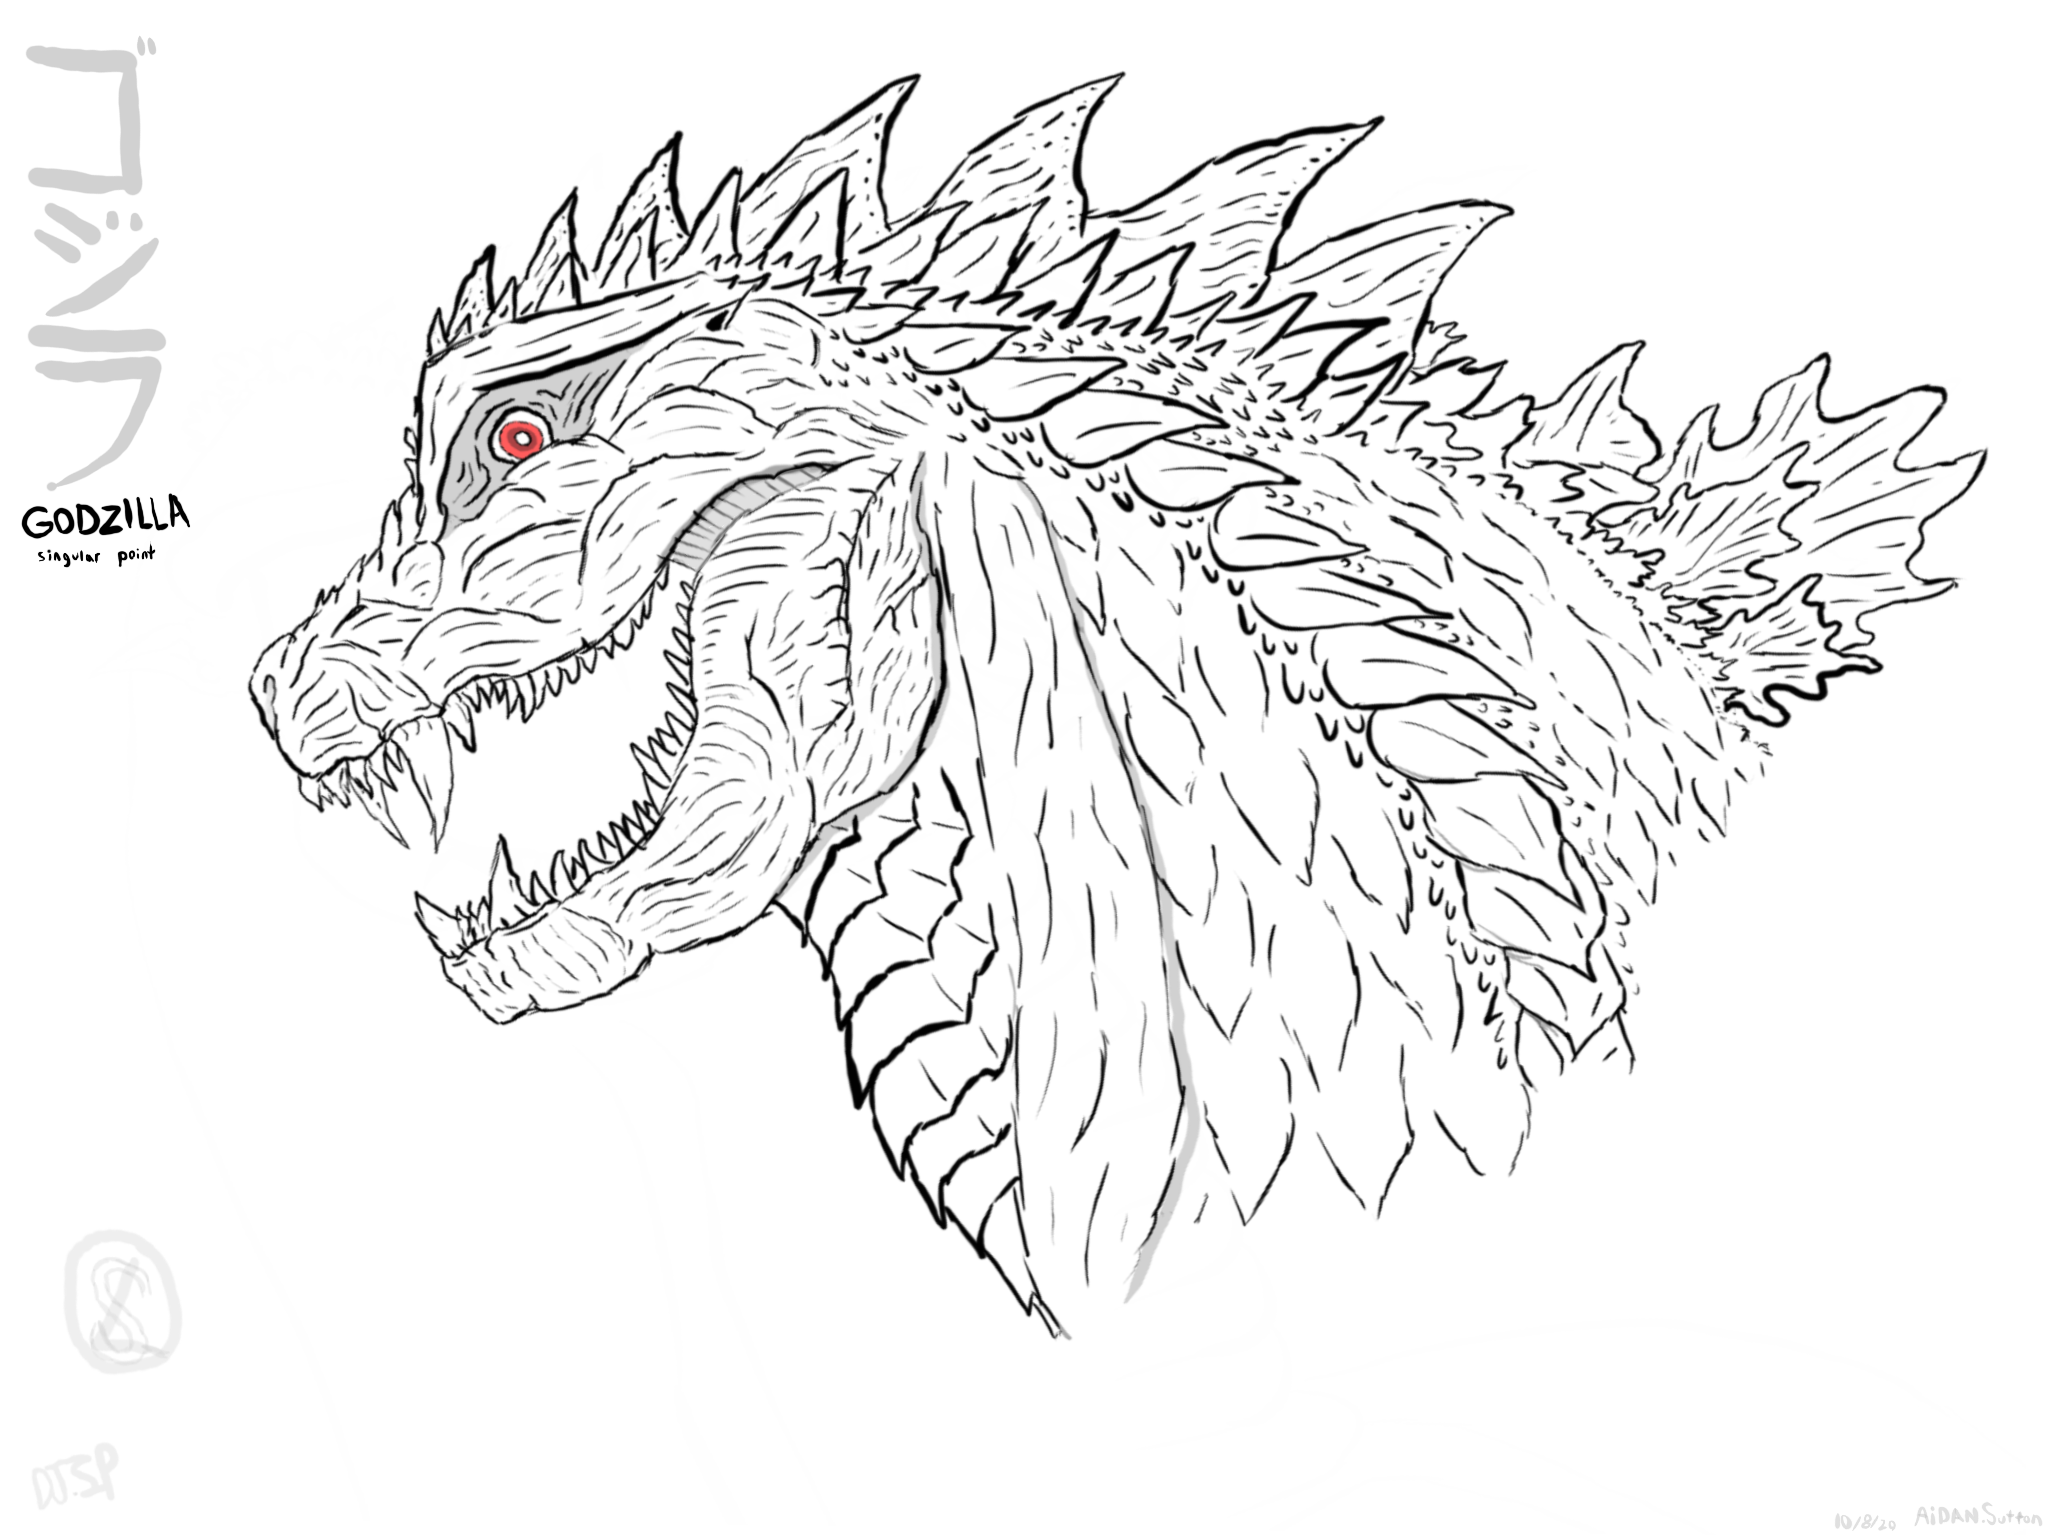 Godzilla Singular Point Art By Lordsuttonofsin On Deviantart